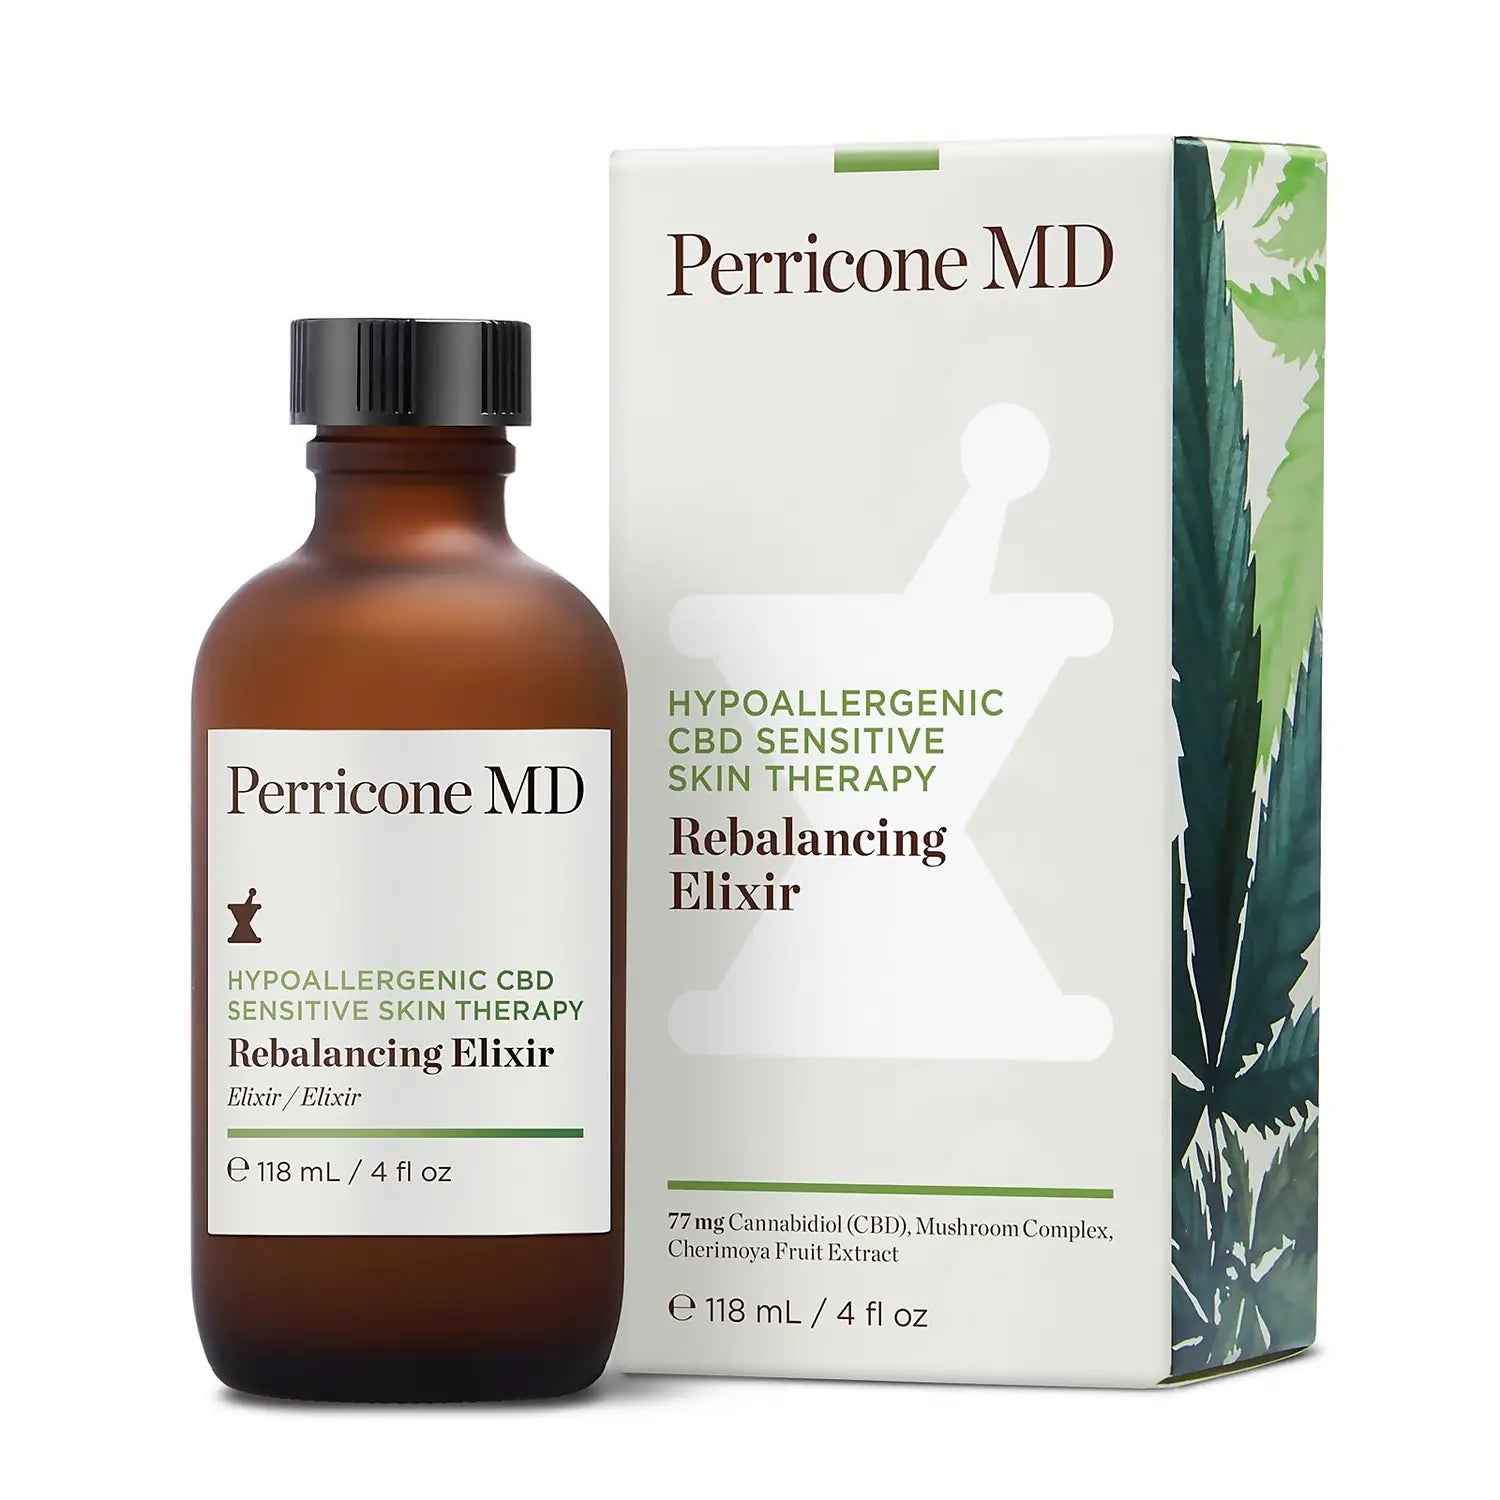 Perricone MD Hypoallergenic CBD Sensitive Skin Therapy Rebalancing Elixir